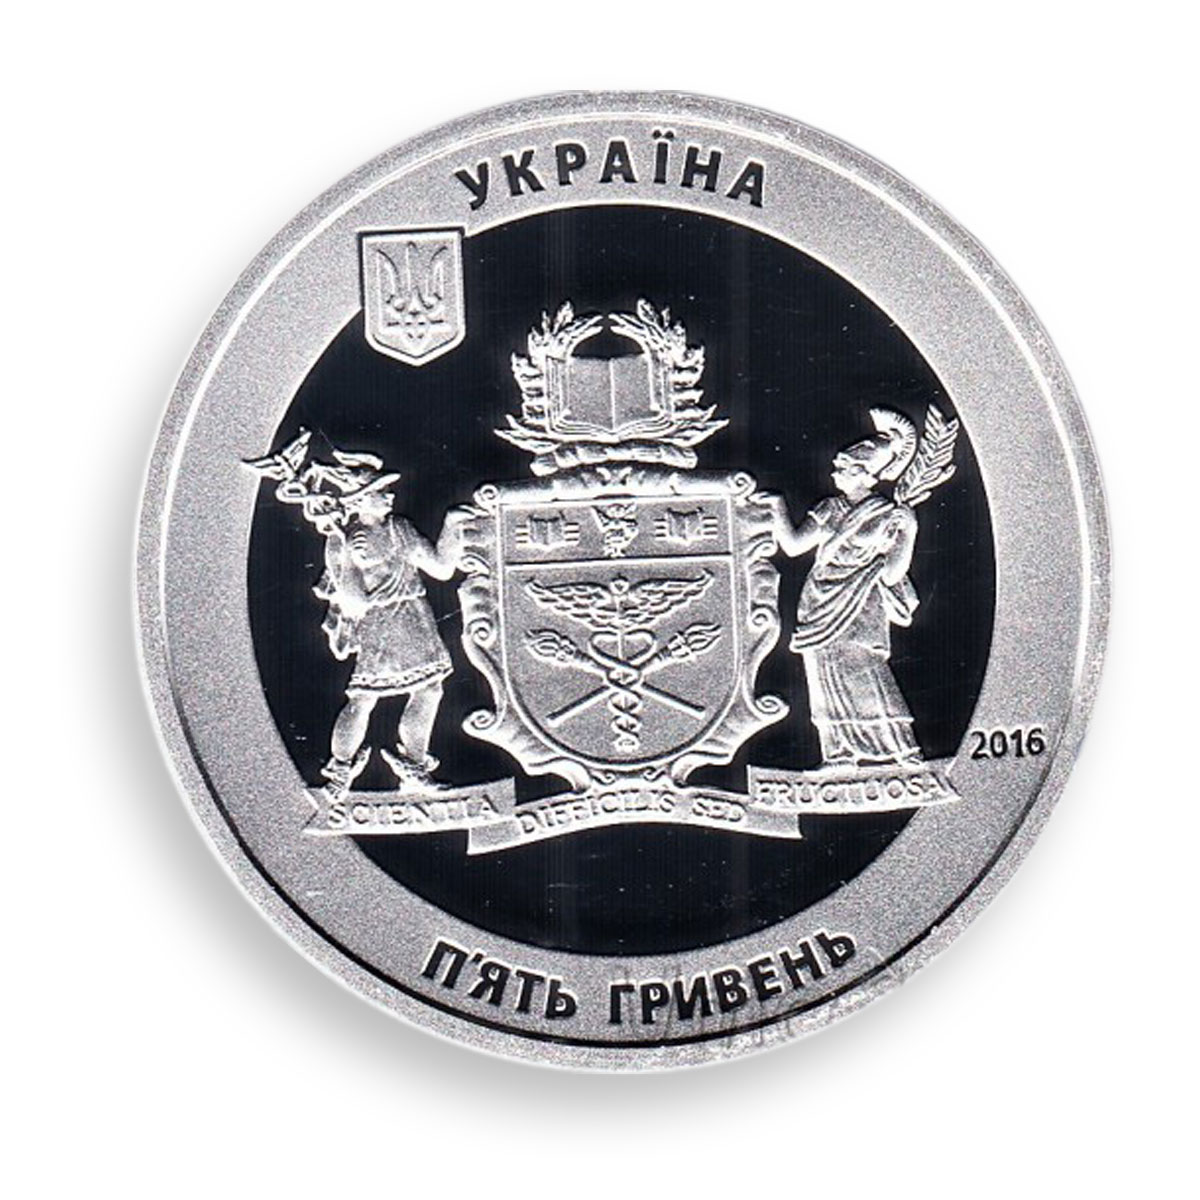 Ukraine 5 hryvnia National University of Trade Economics silver proof coin 2016